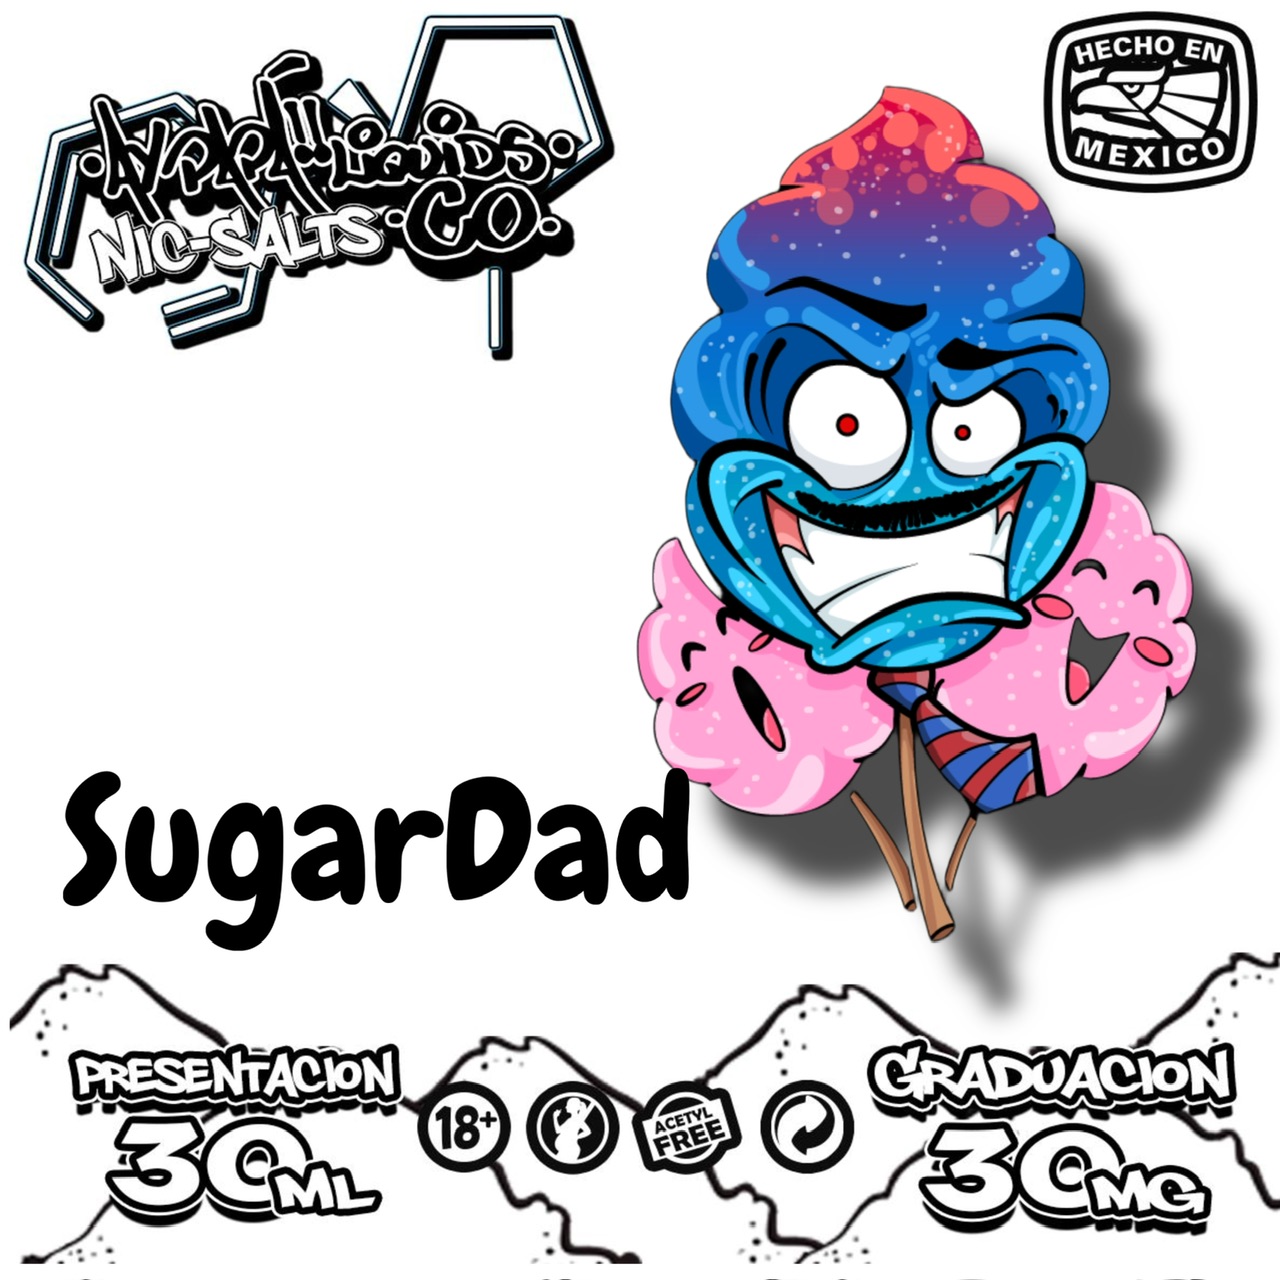 SugarDad Nicsalt